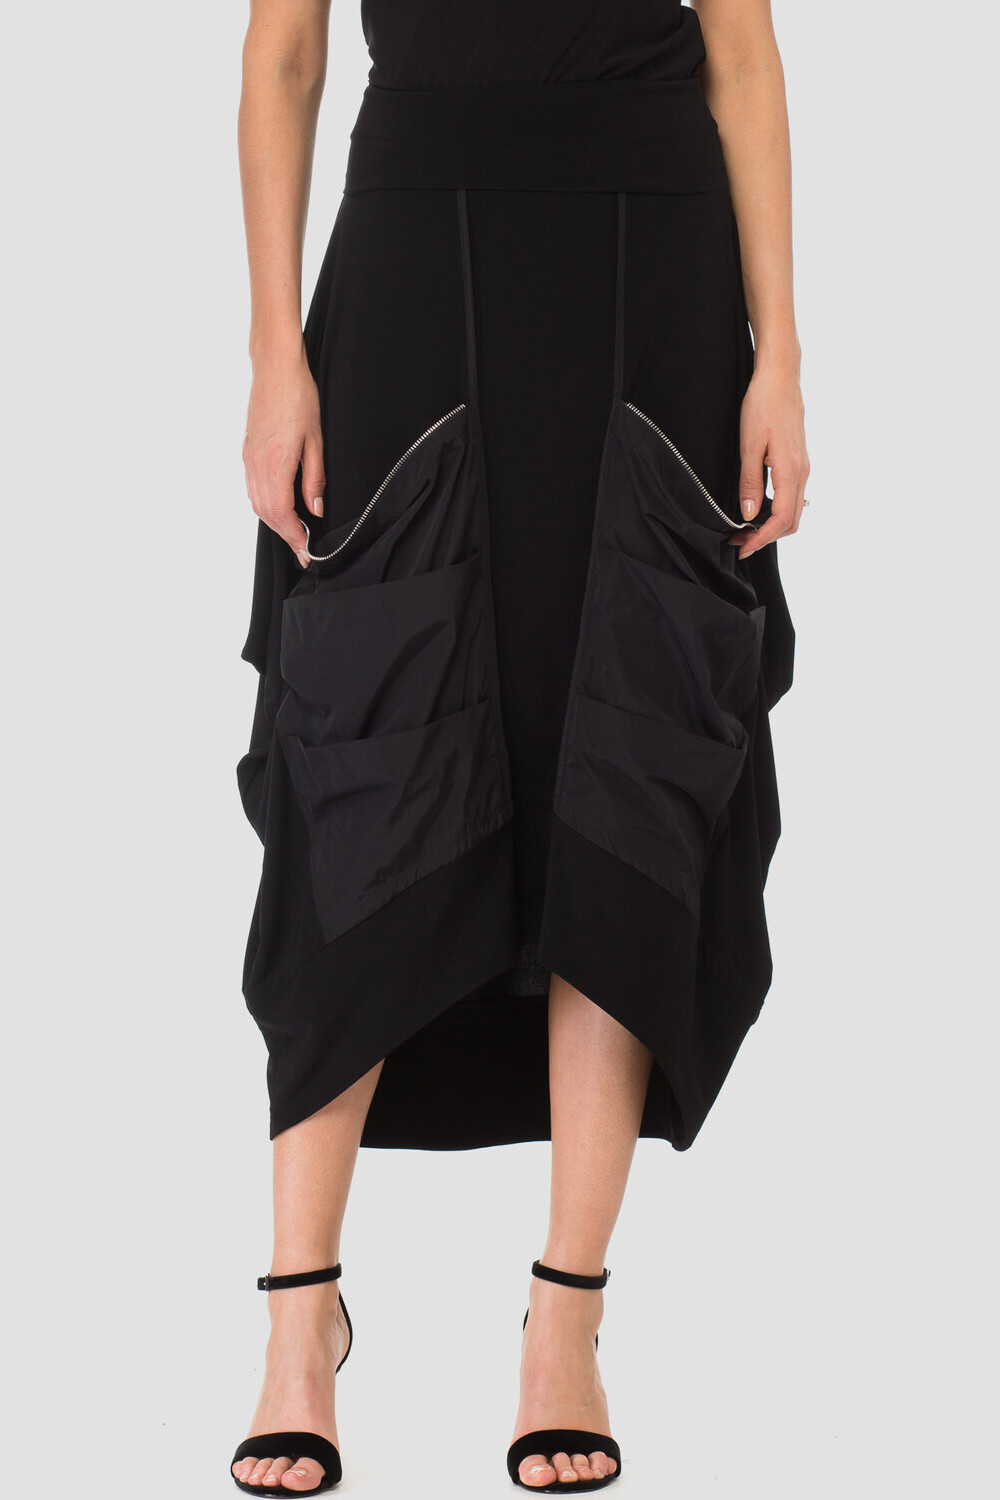 Joseph Ribkoff skirt style 183450. Black